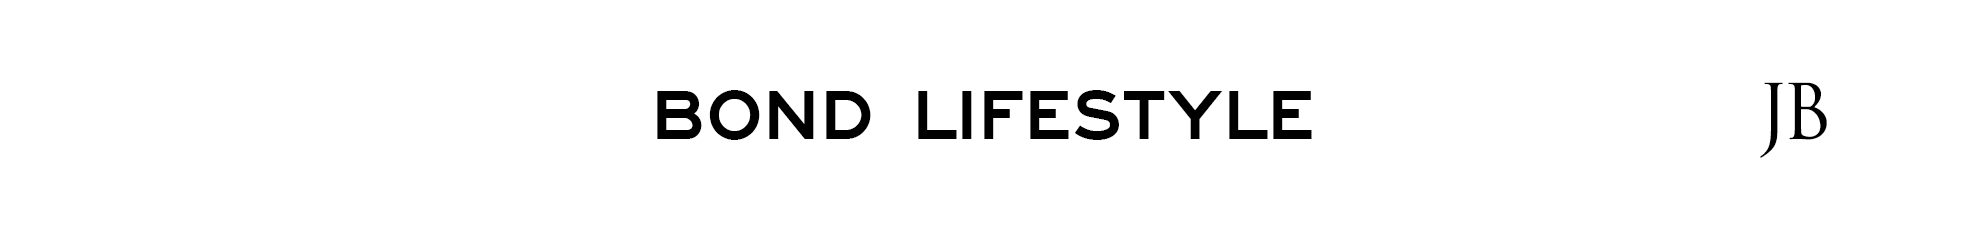 bond-lifestyle-logo.png